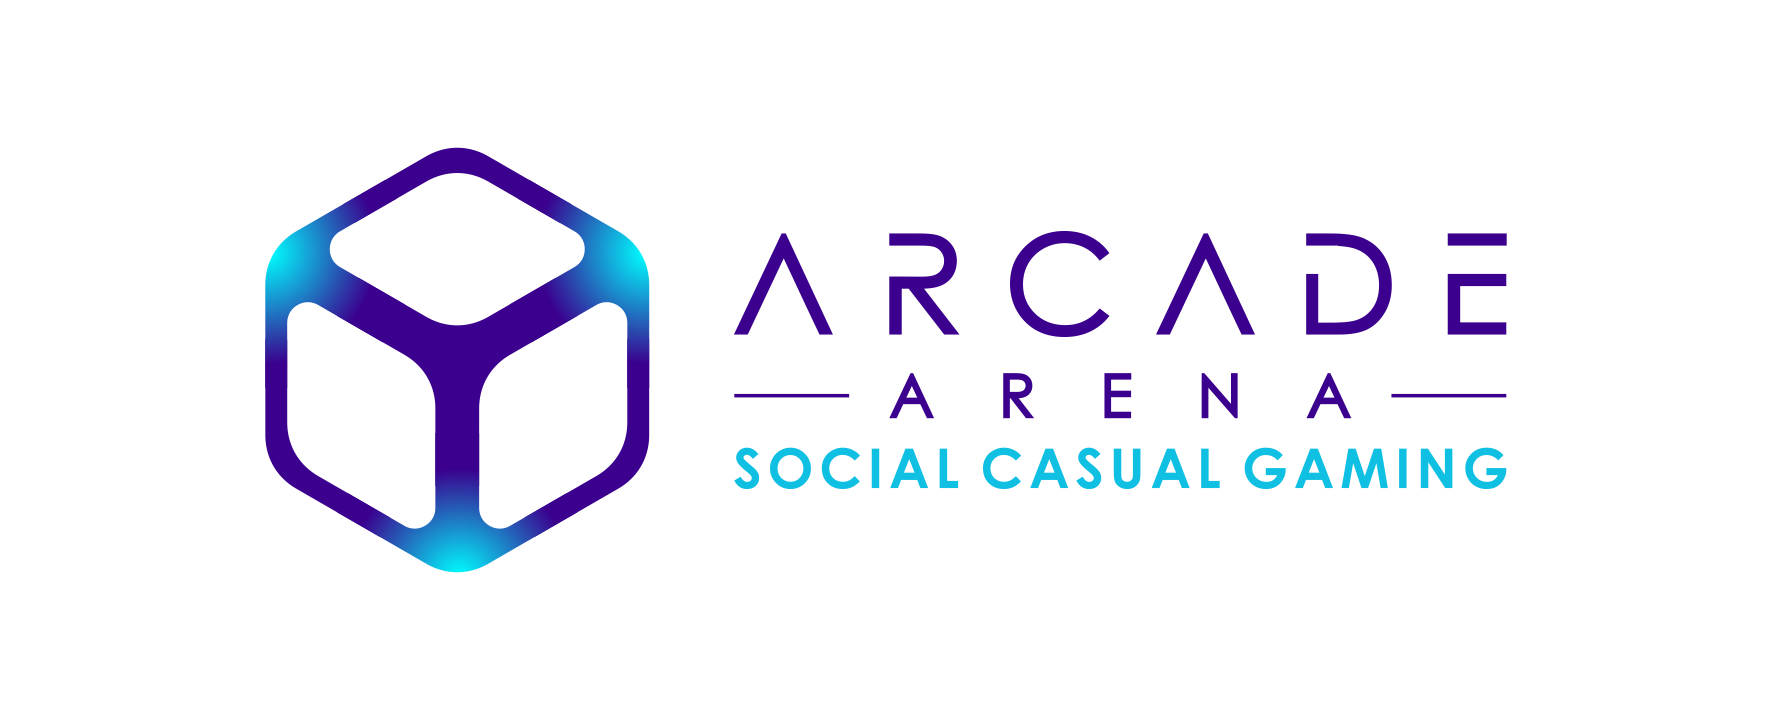 Arcade Arena, social casual gaming